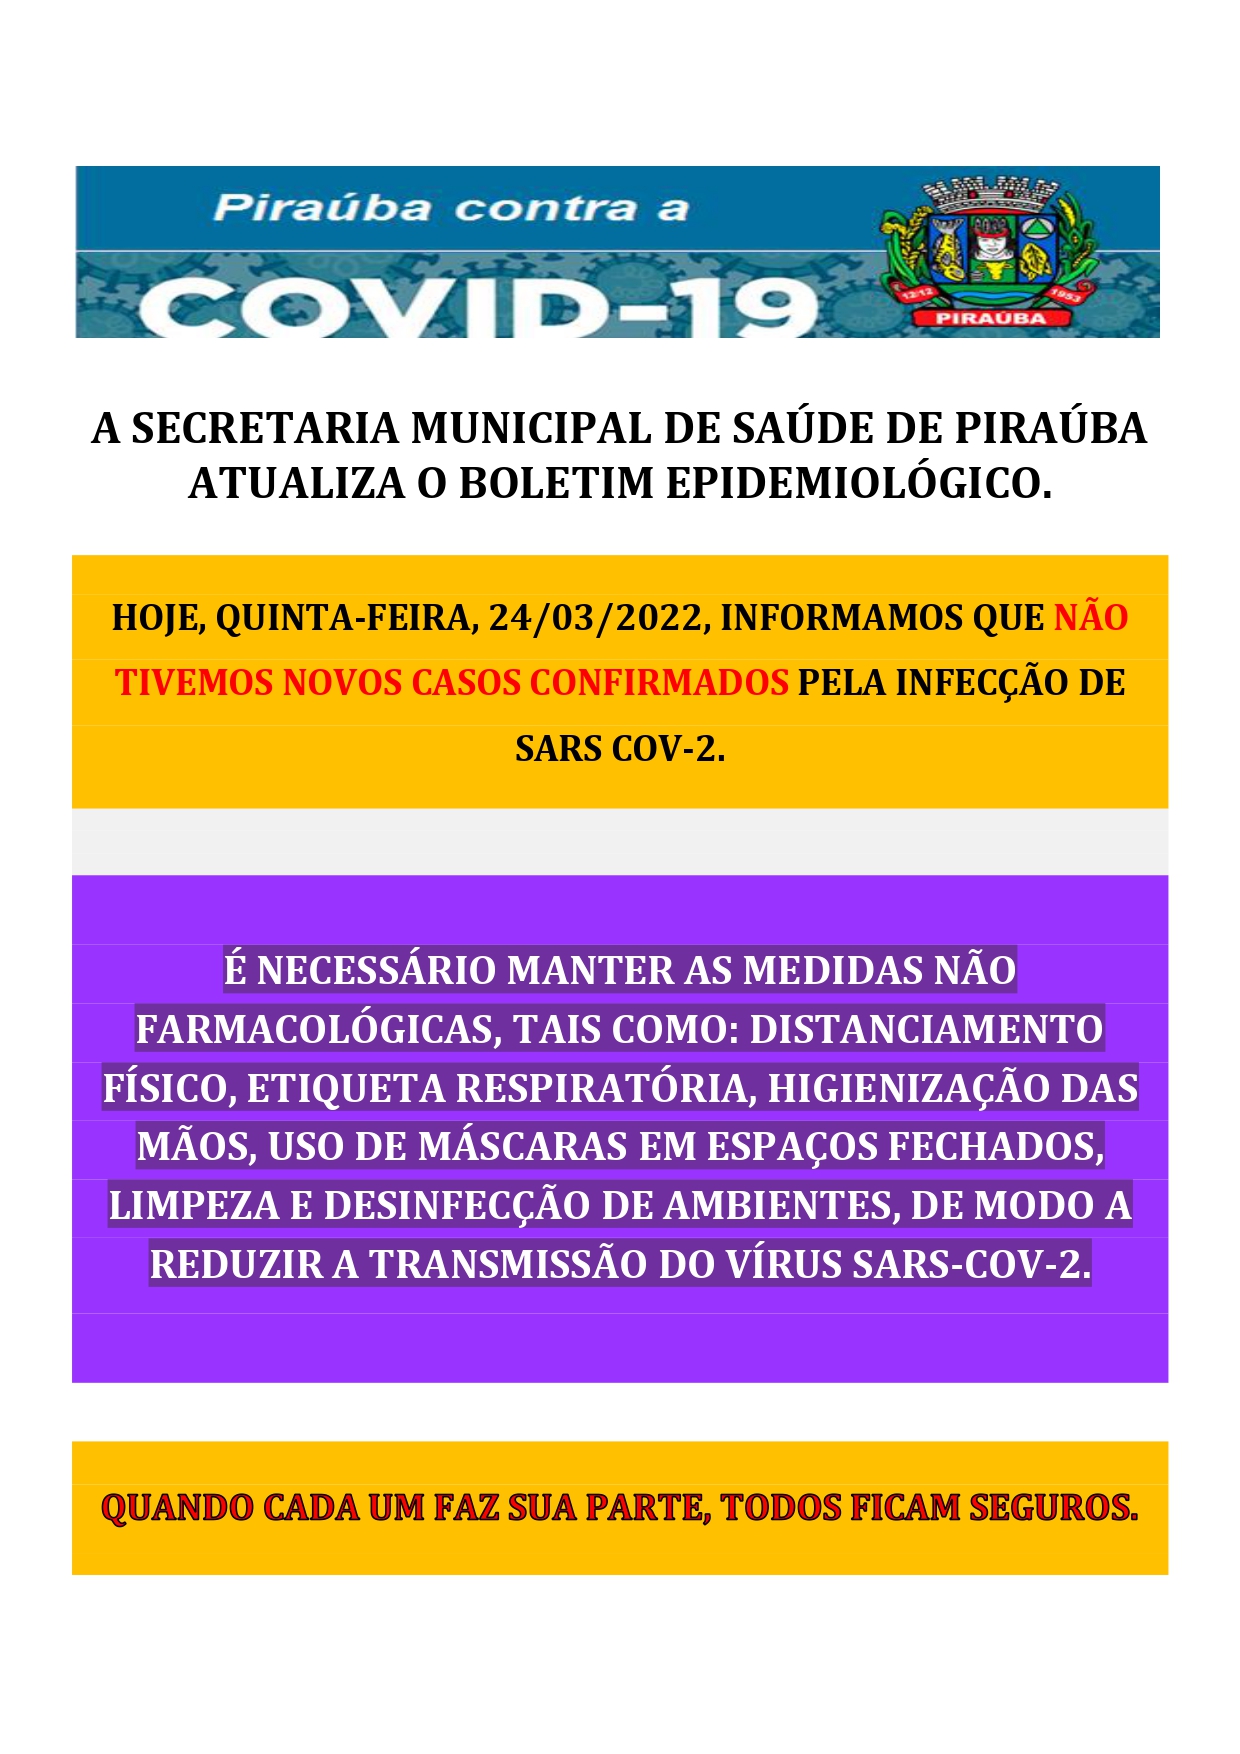 BOLETIM EPIDEMIOLÓGICO DE COVID-19 (24/03/2022)